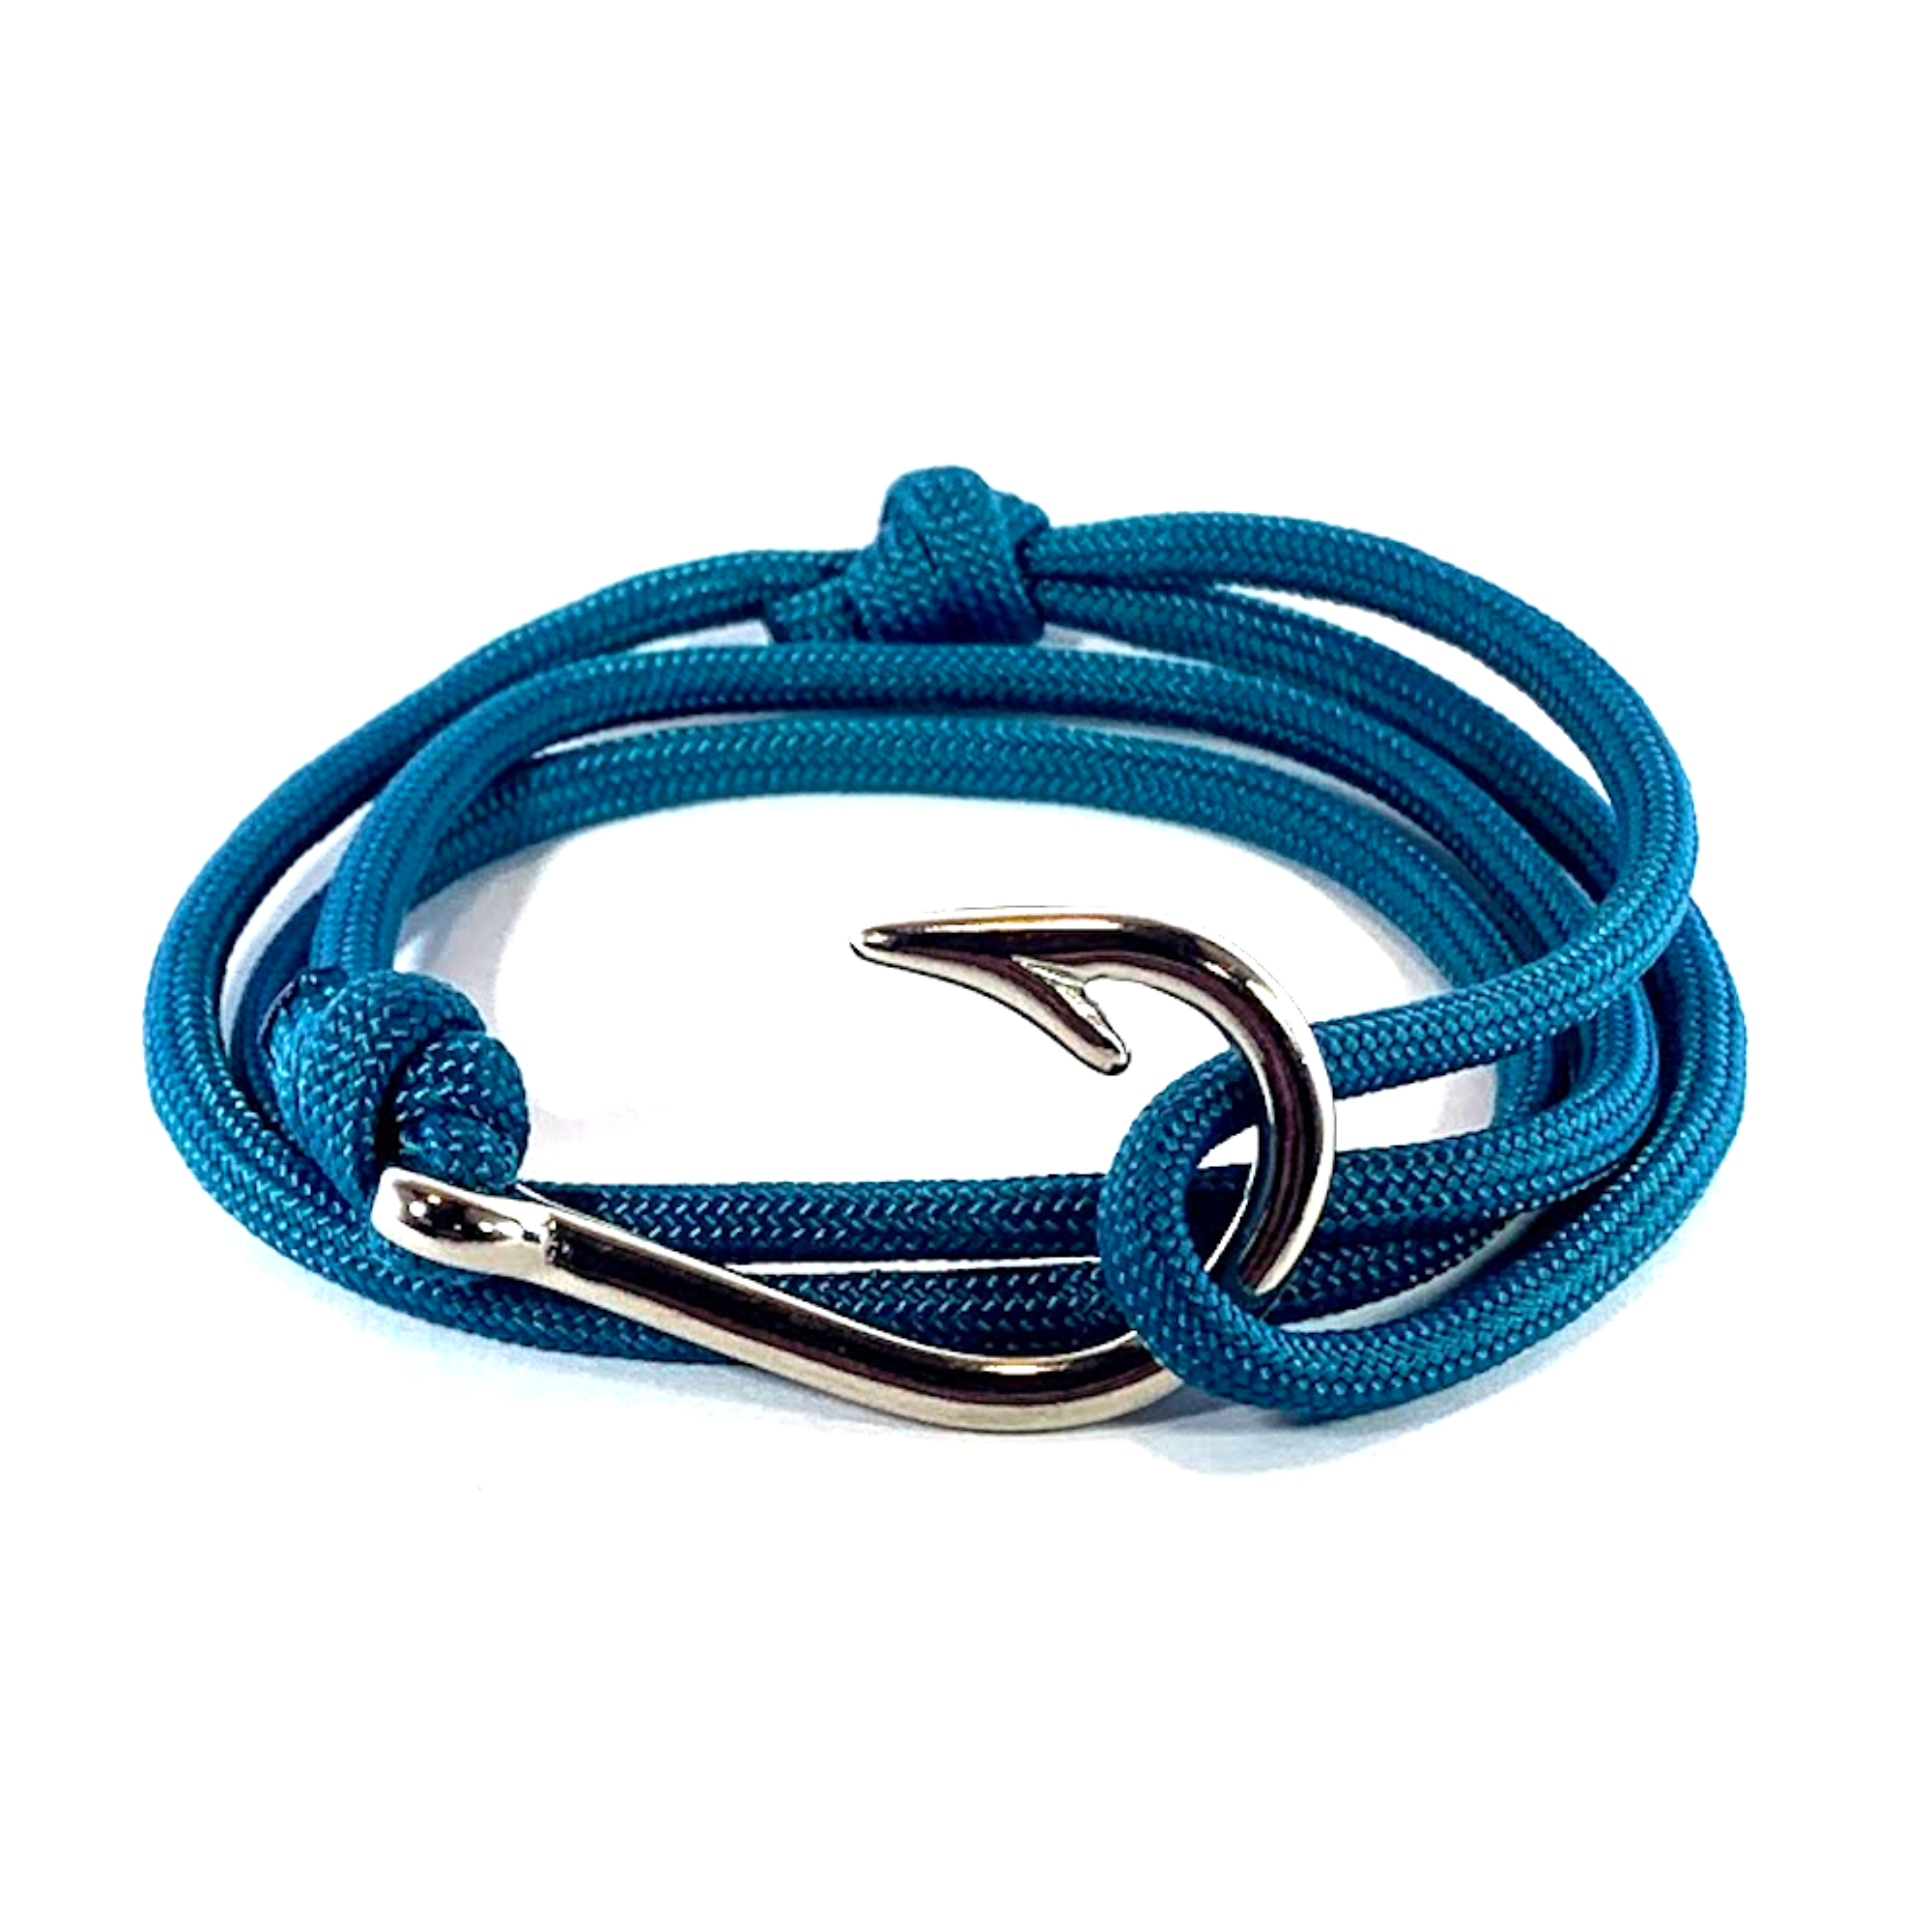 The Caribbean Turquoise - Paracord Fishhook & Anchor Bracelet